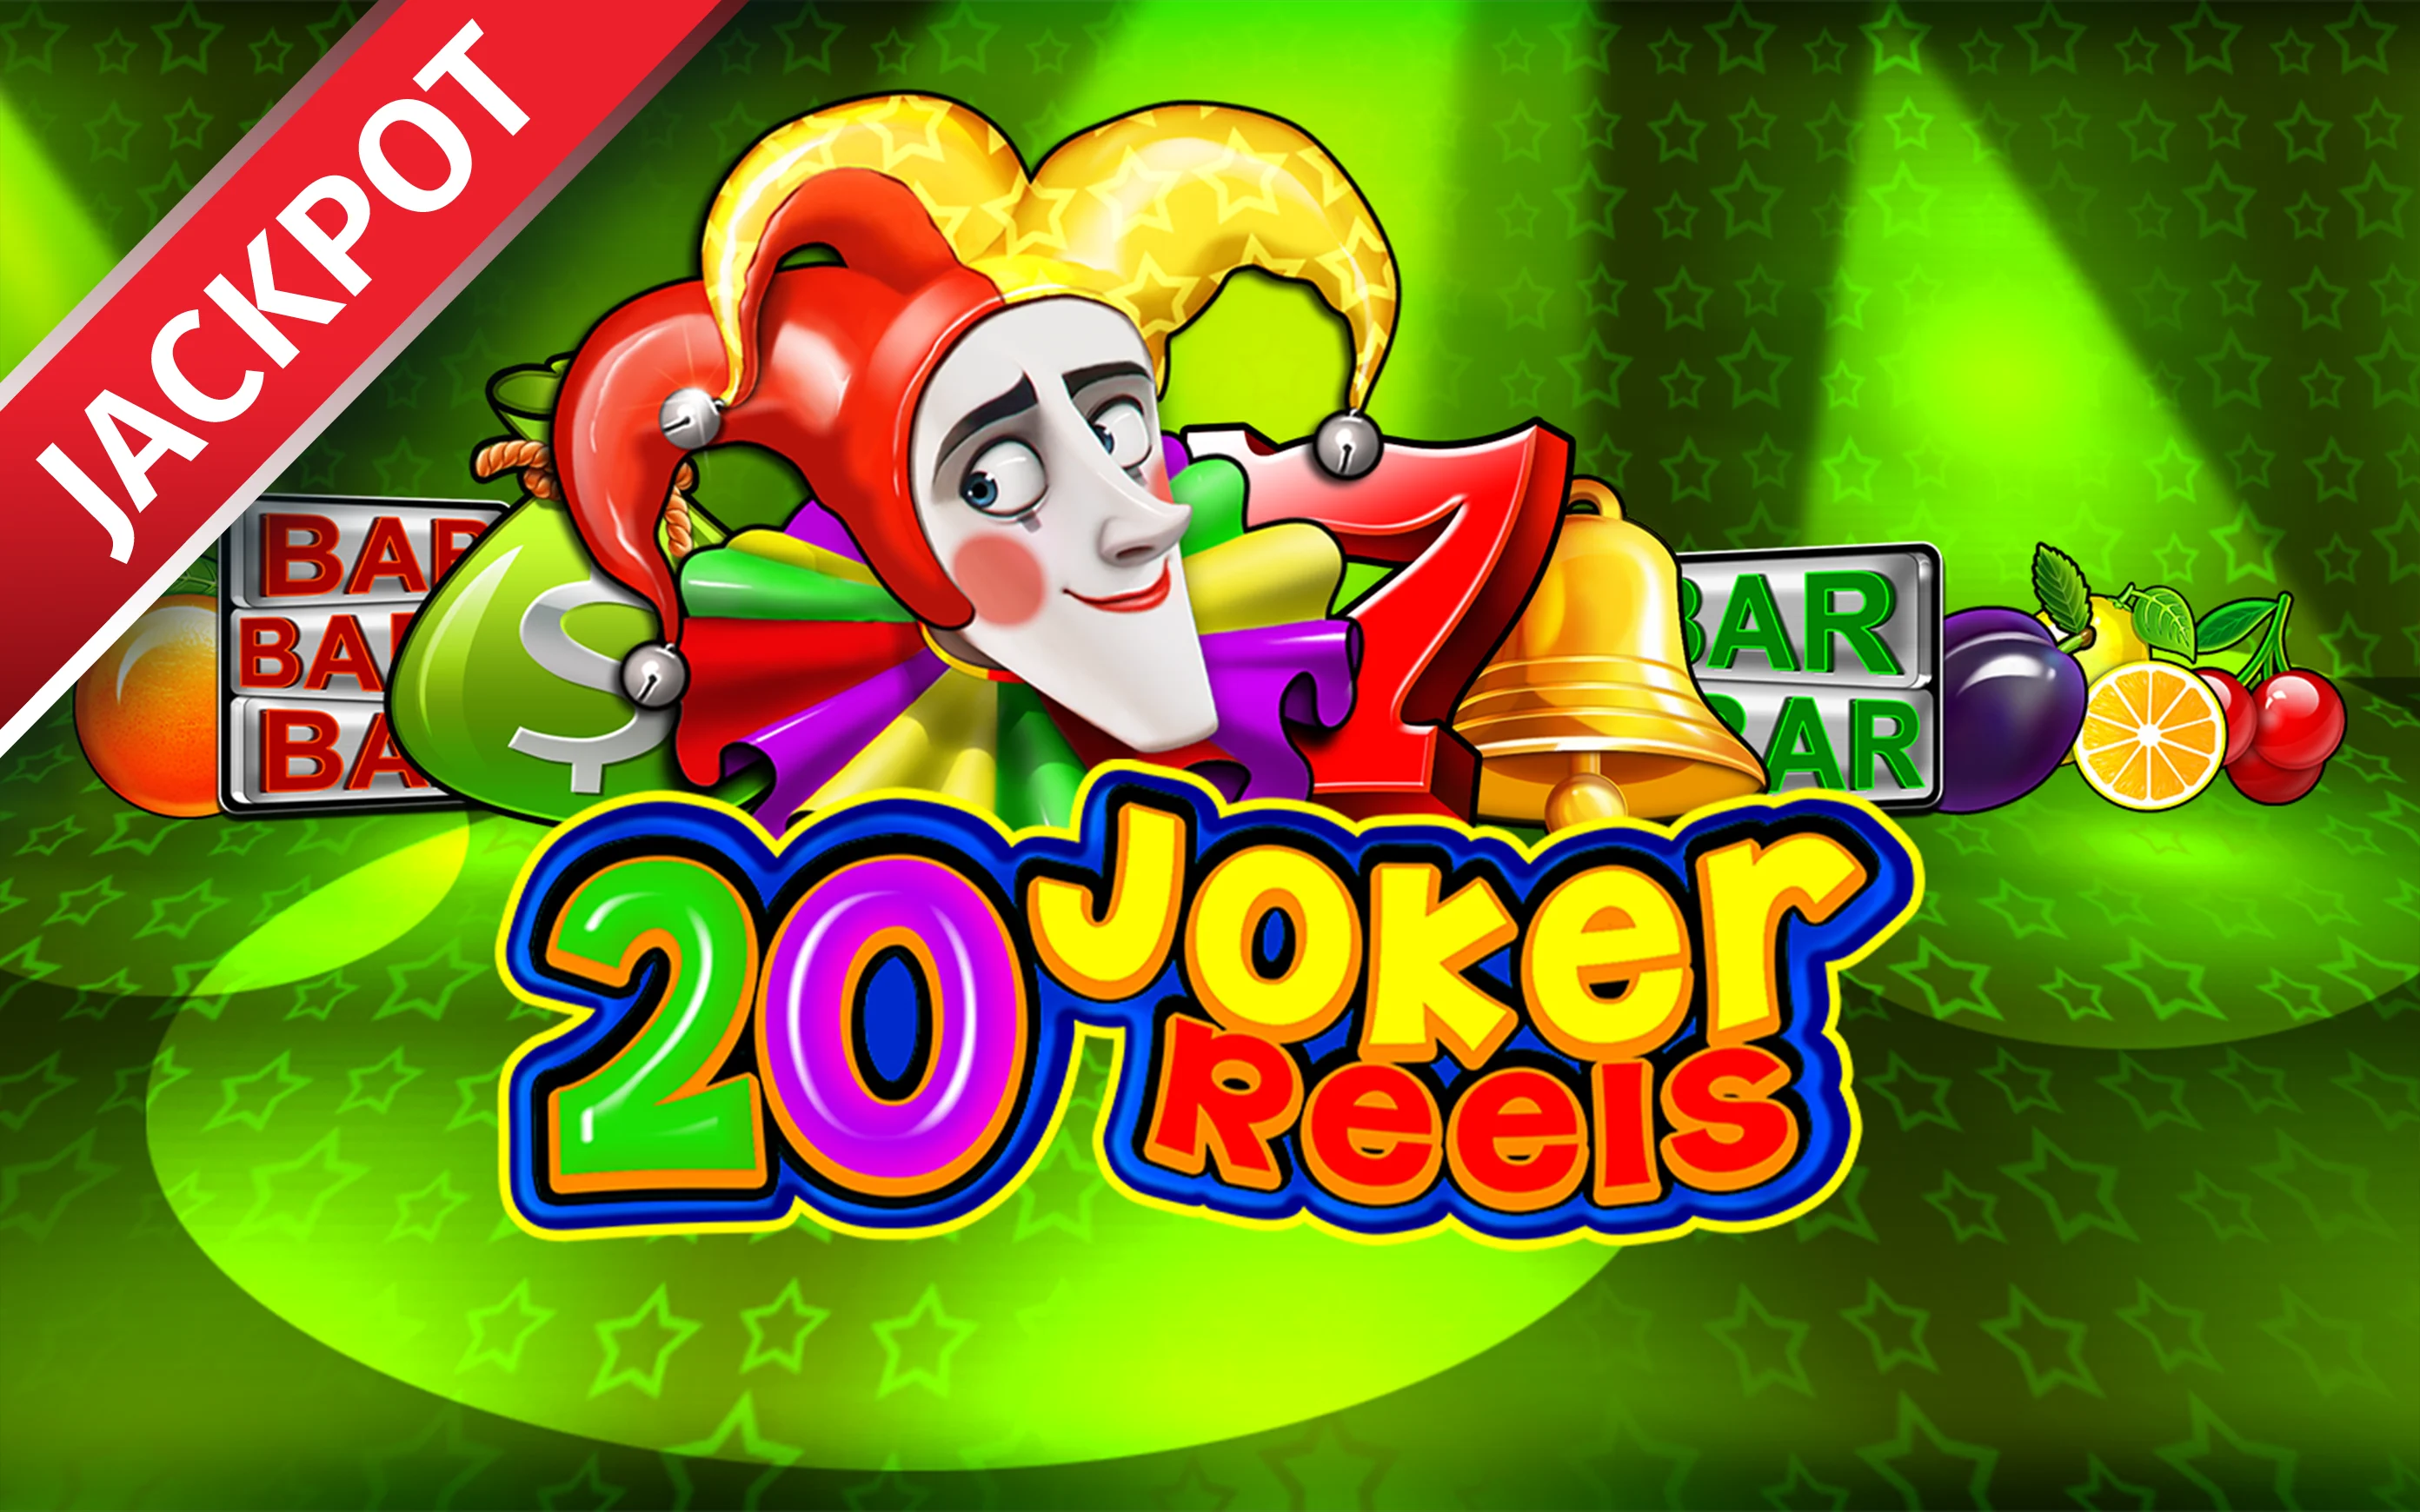 Jogue 20 Joker Reels no casino online Starcasino.be 